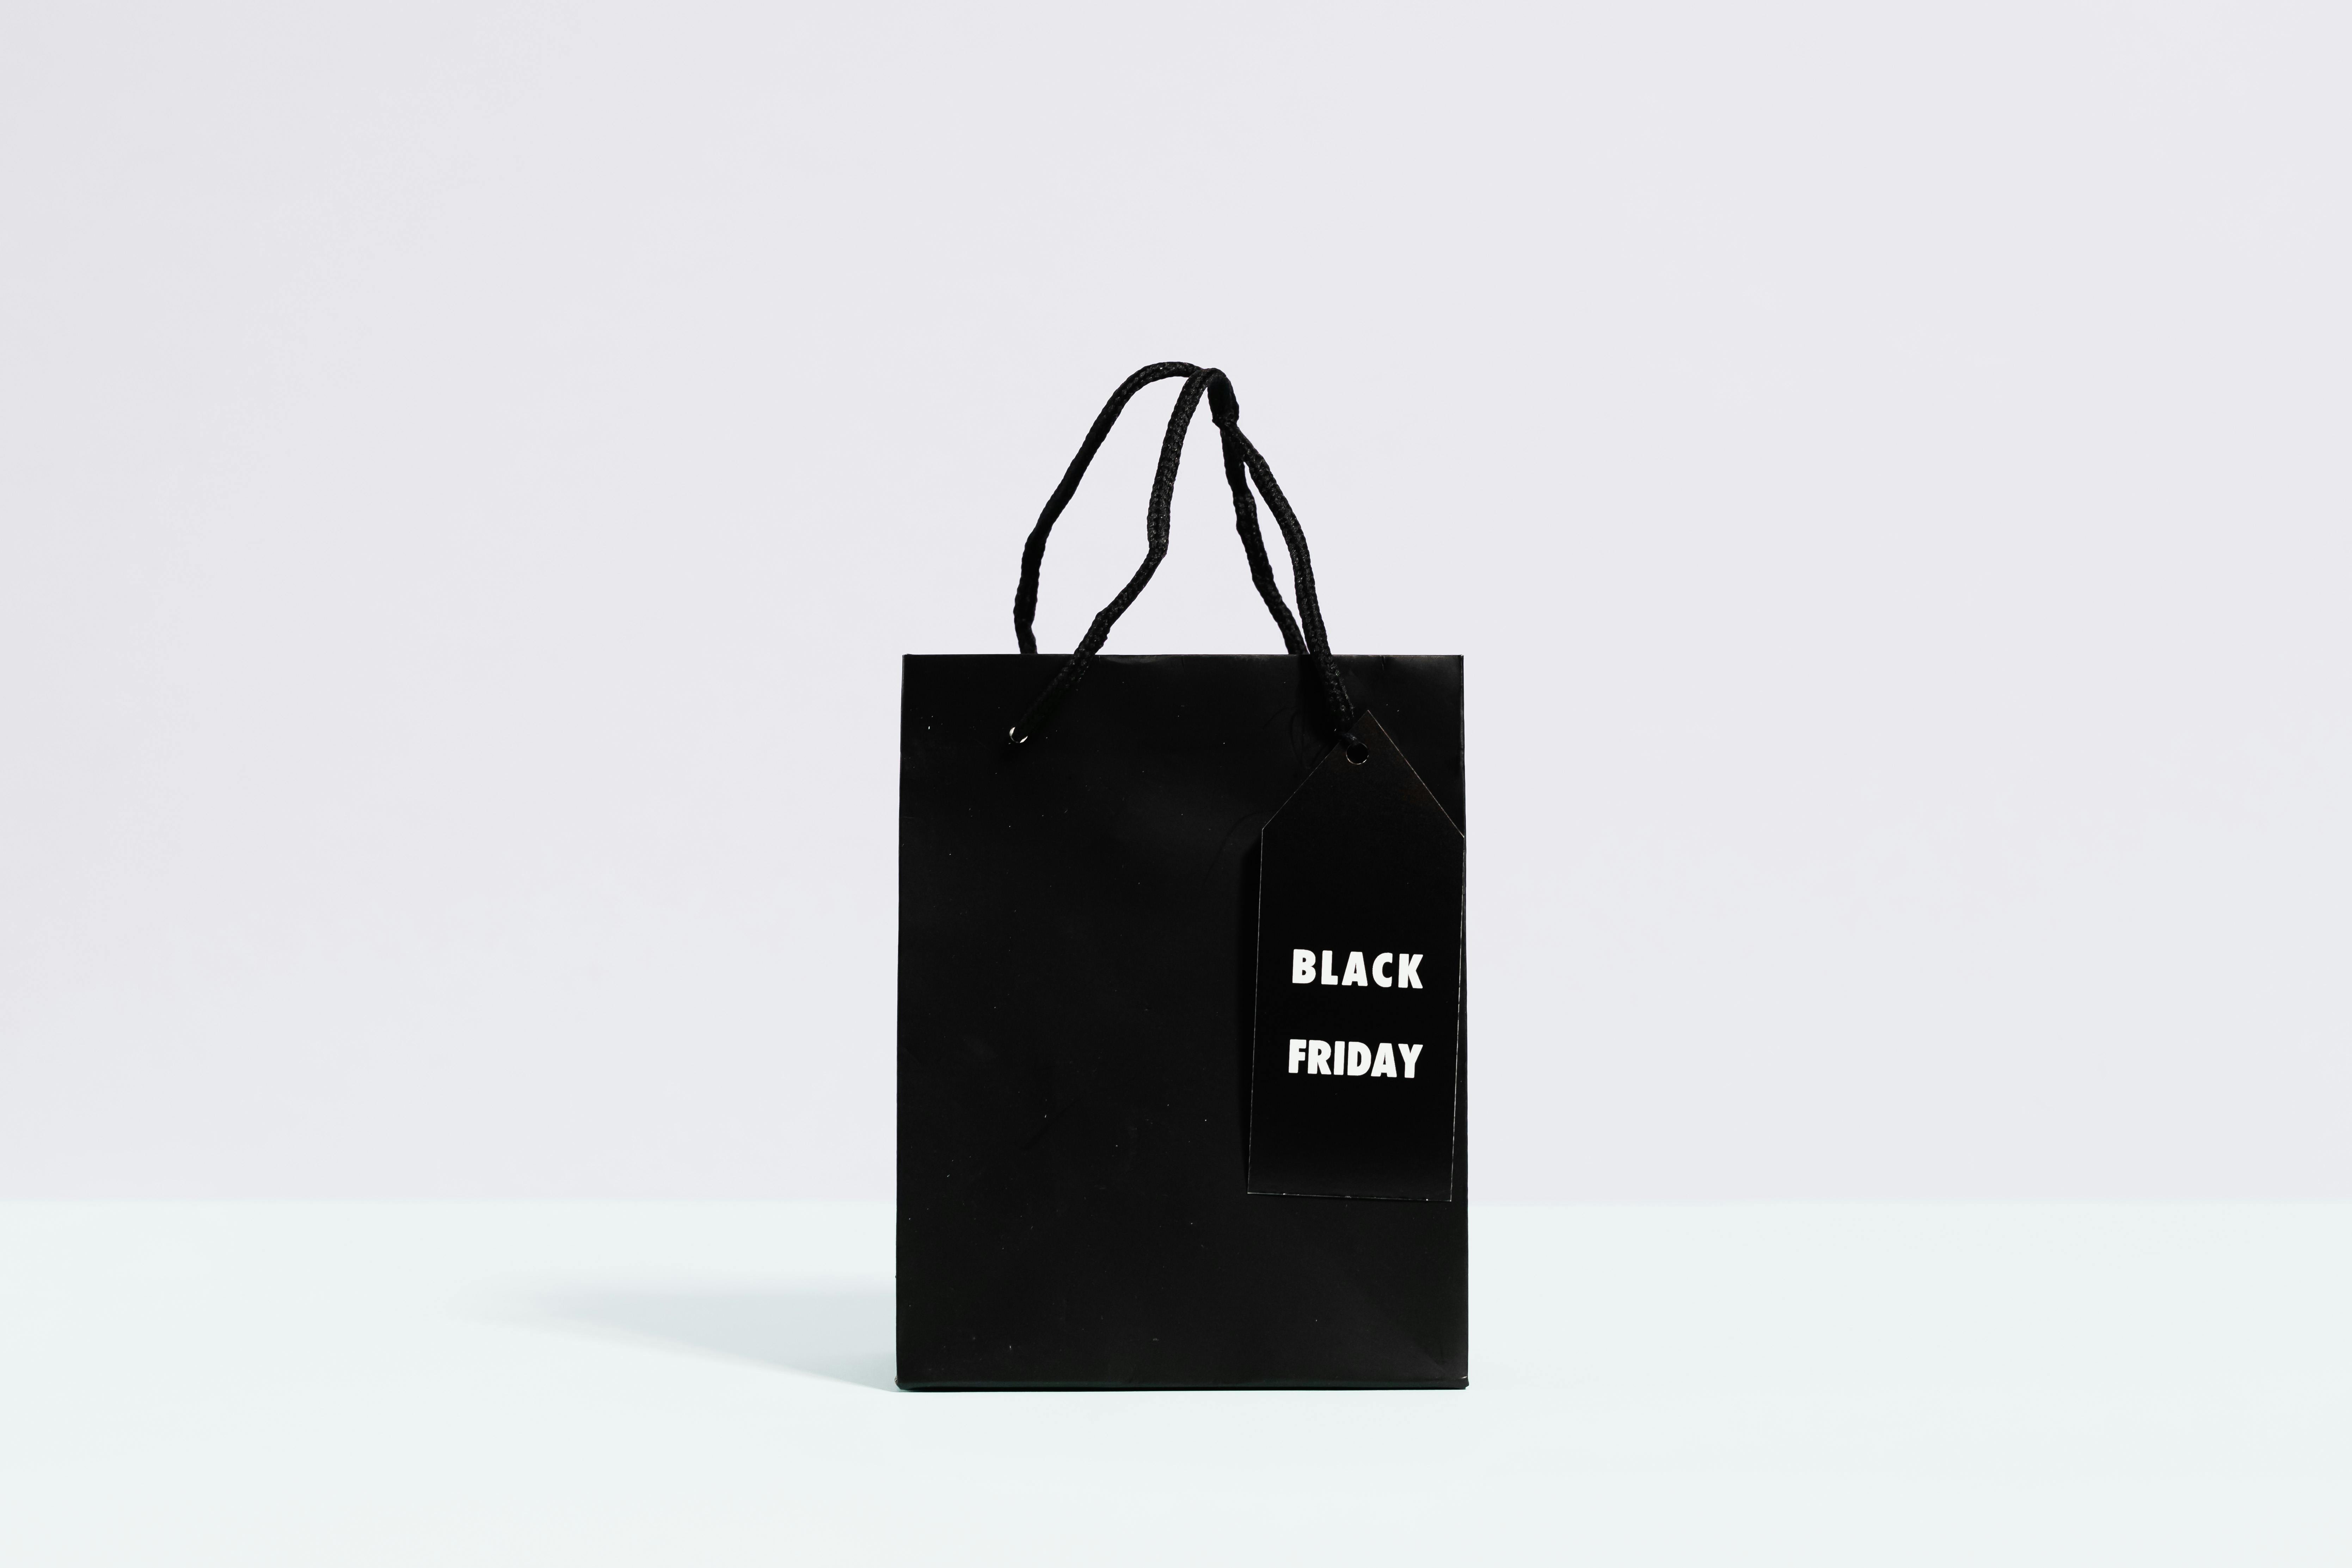 Black Paper Bag \u00b7 Free Stock Photo